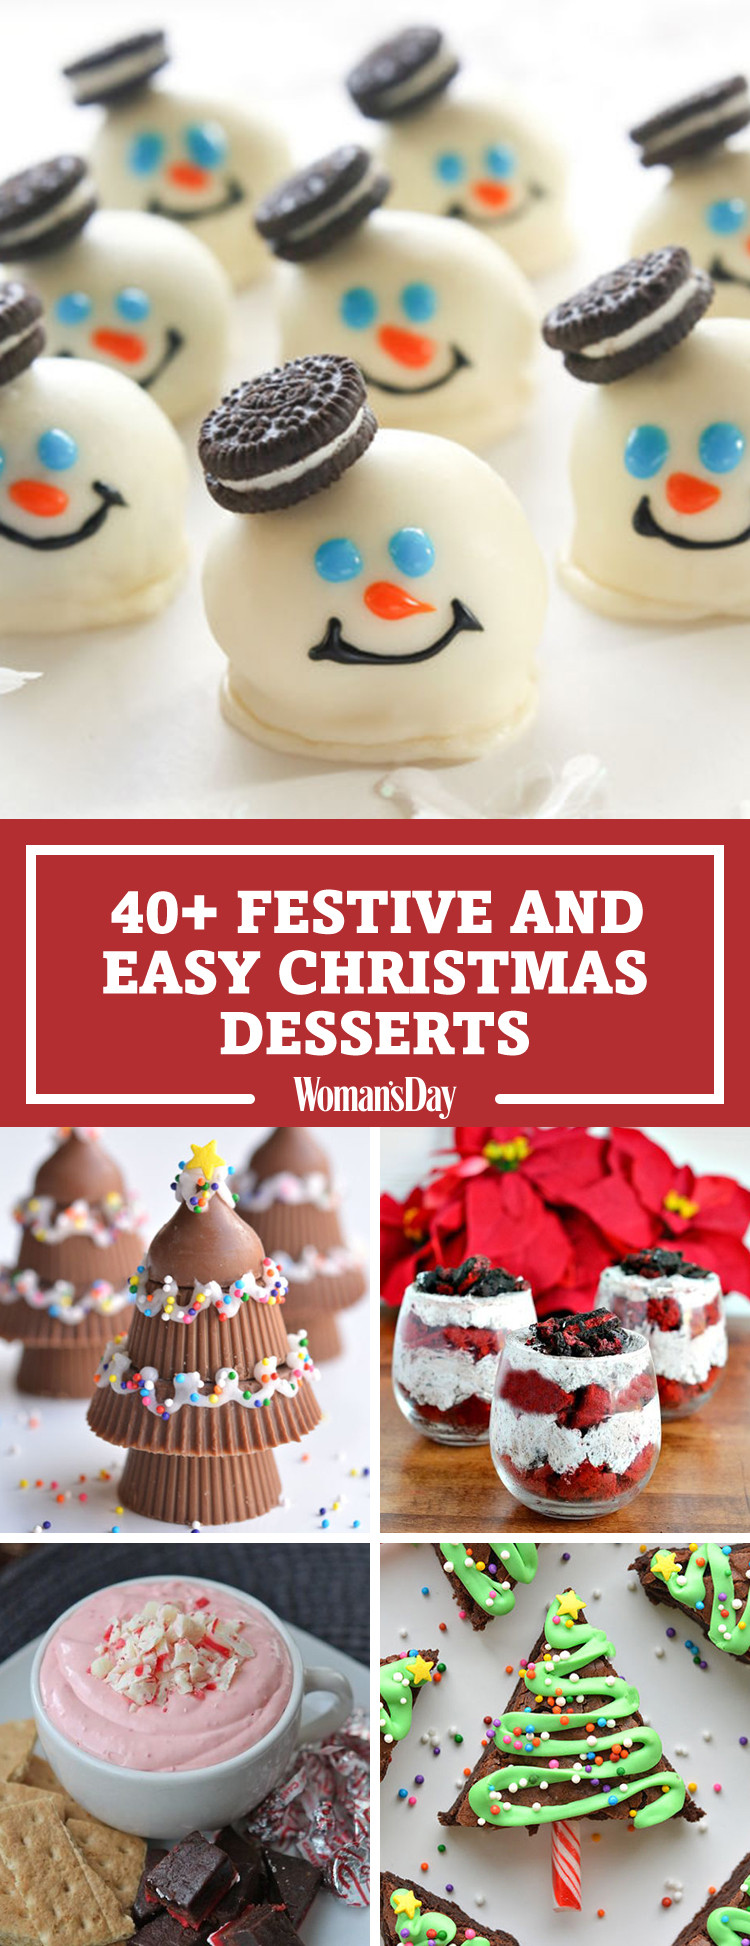 Easy To Make Christmas Desserts
 57 Easy Christmas Dessert Recipes Best Ideas for Fun